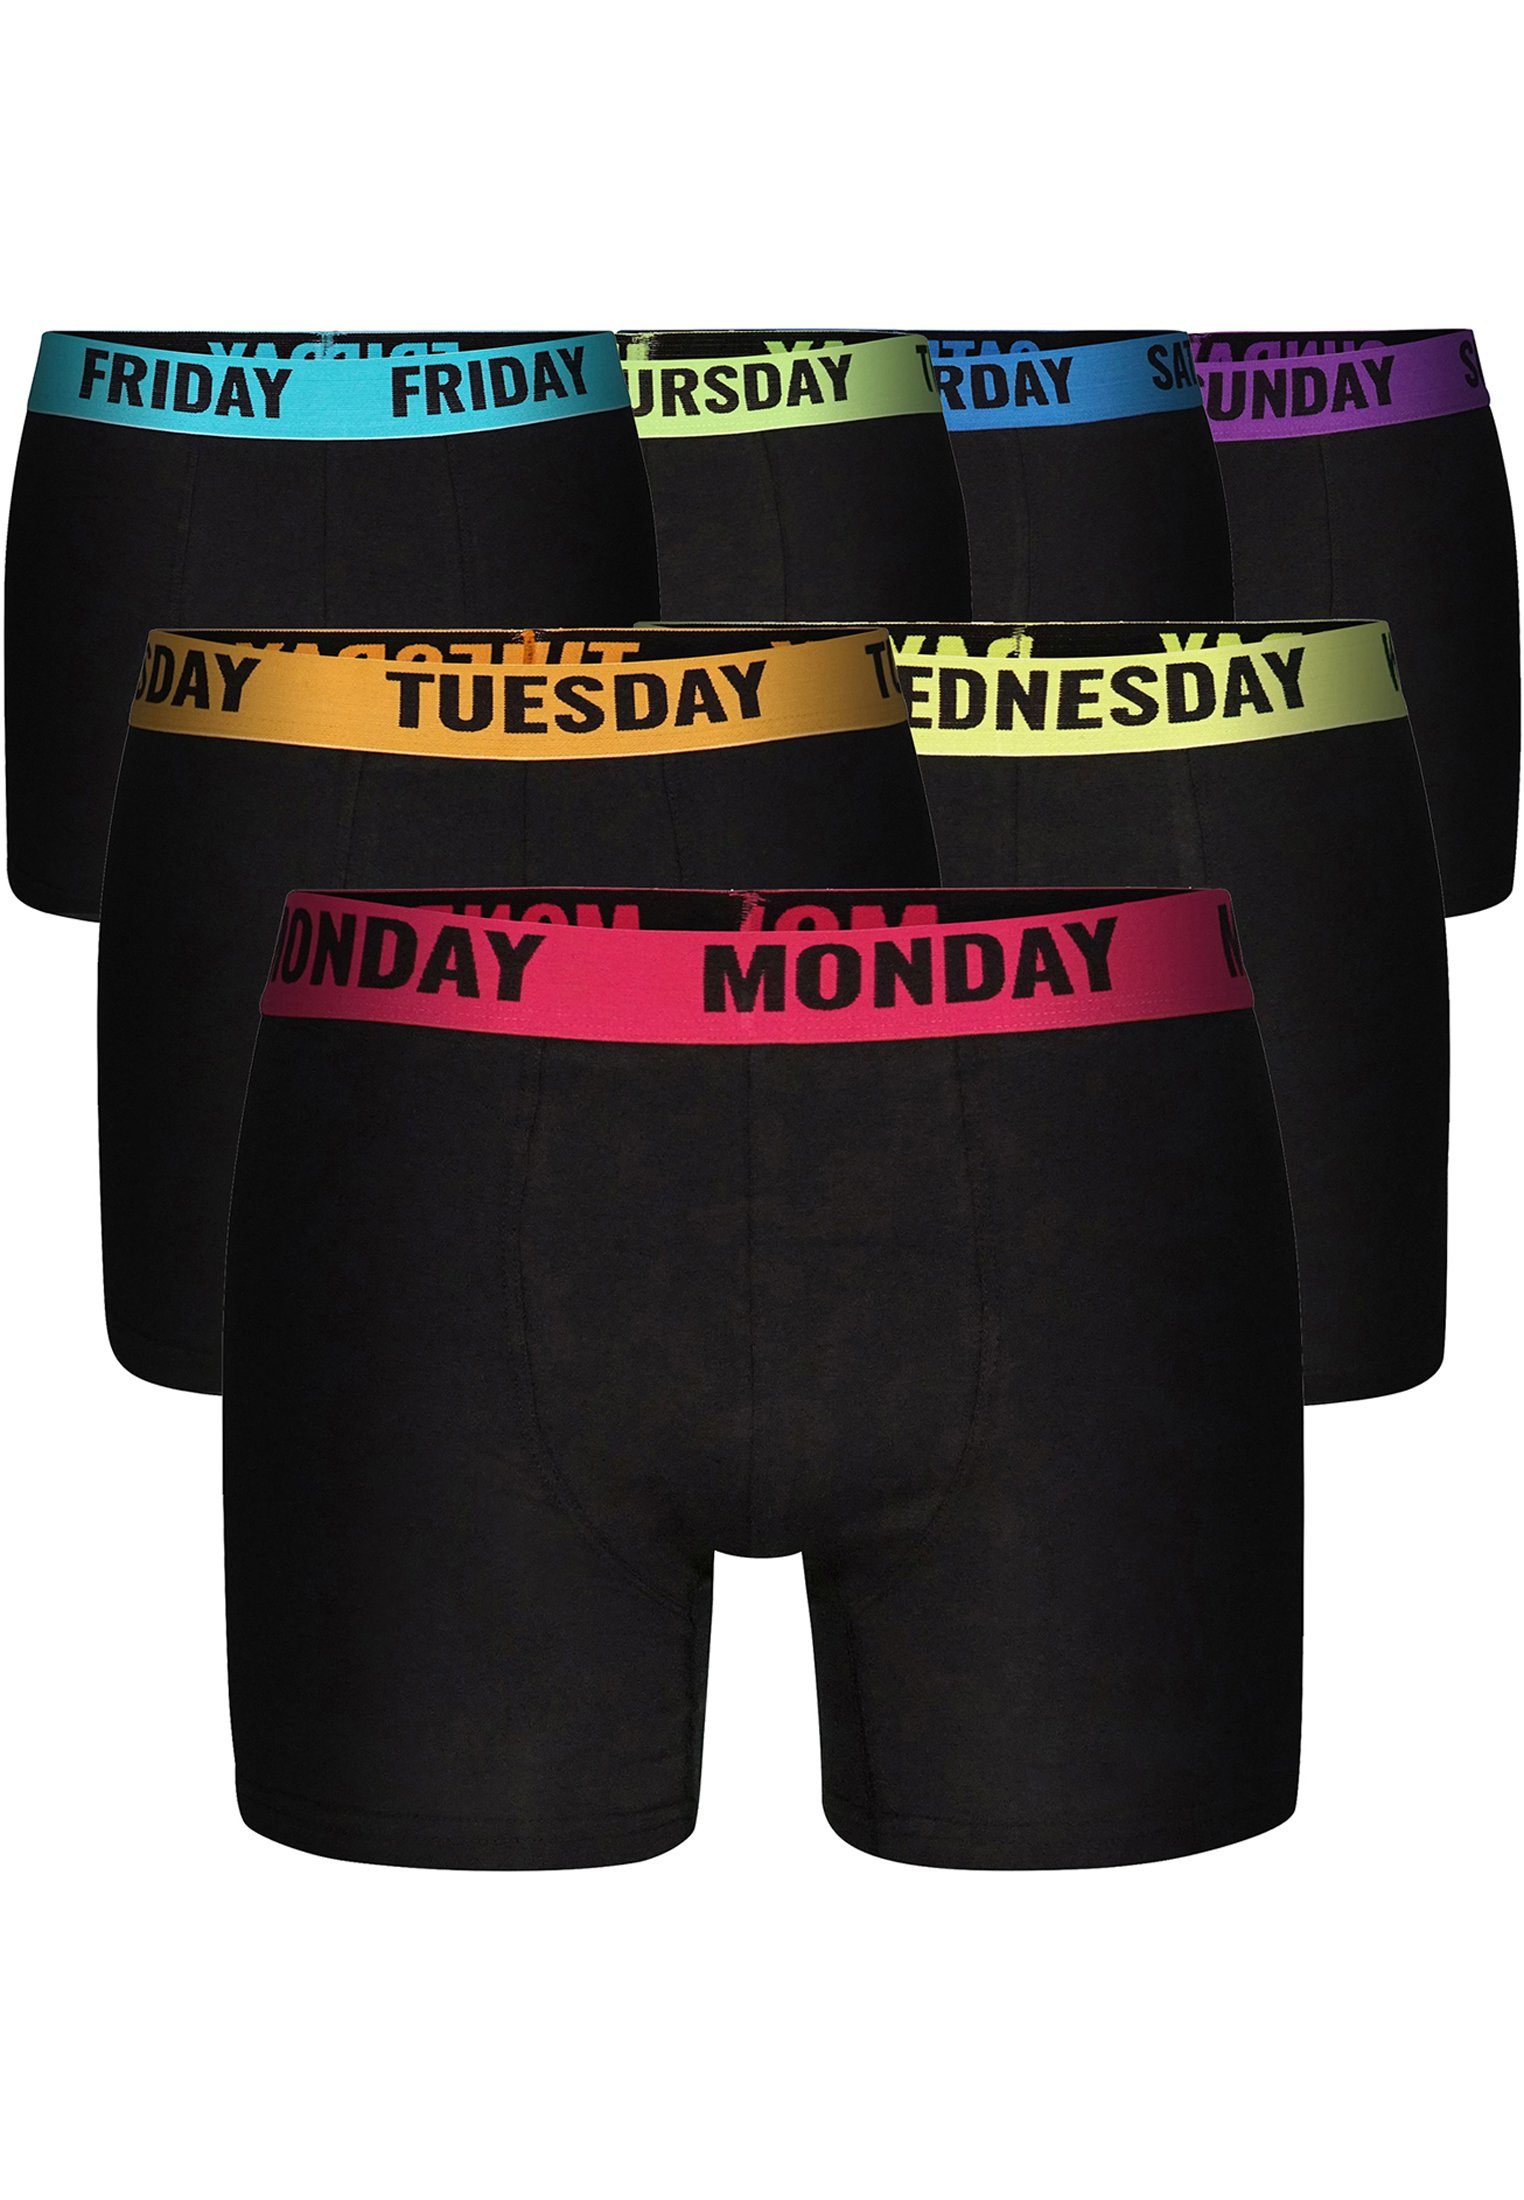 HAPPY SHORTS Retro Pants Motivprint Trunks | Unterhosen